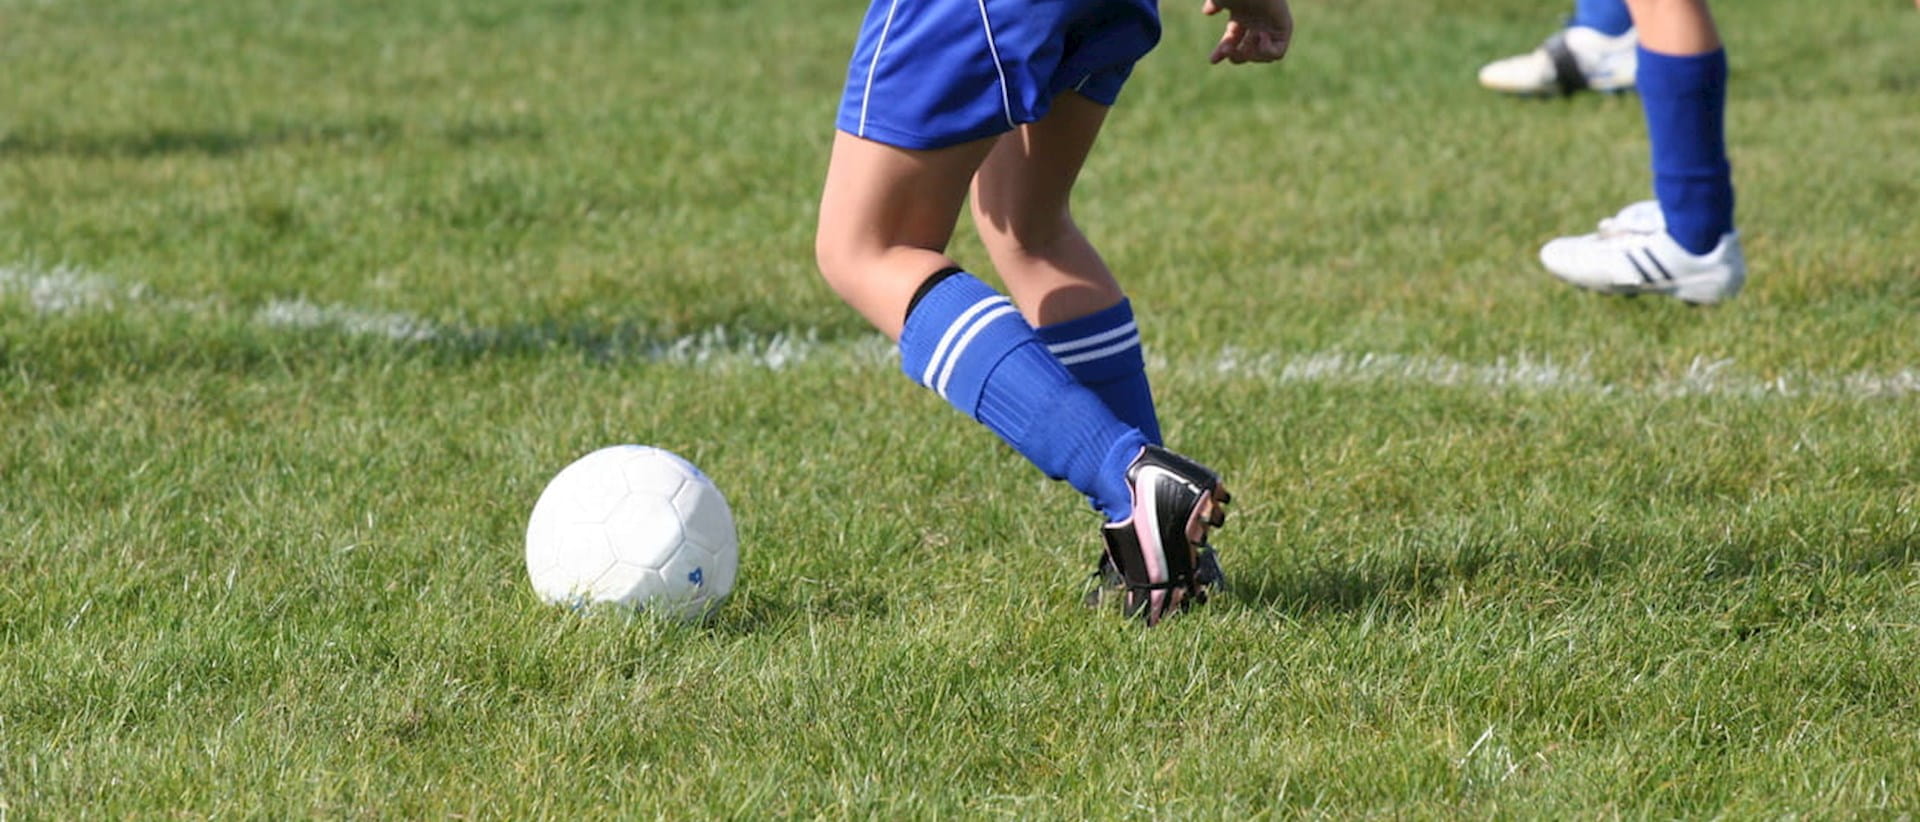 Teen girl playing football